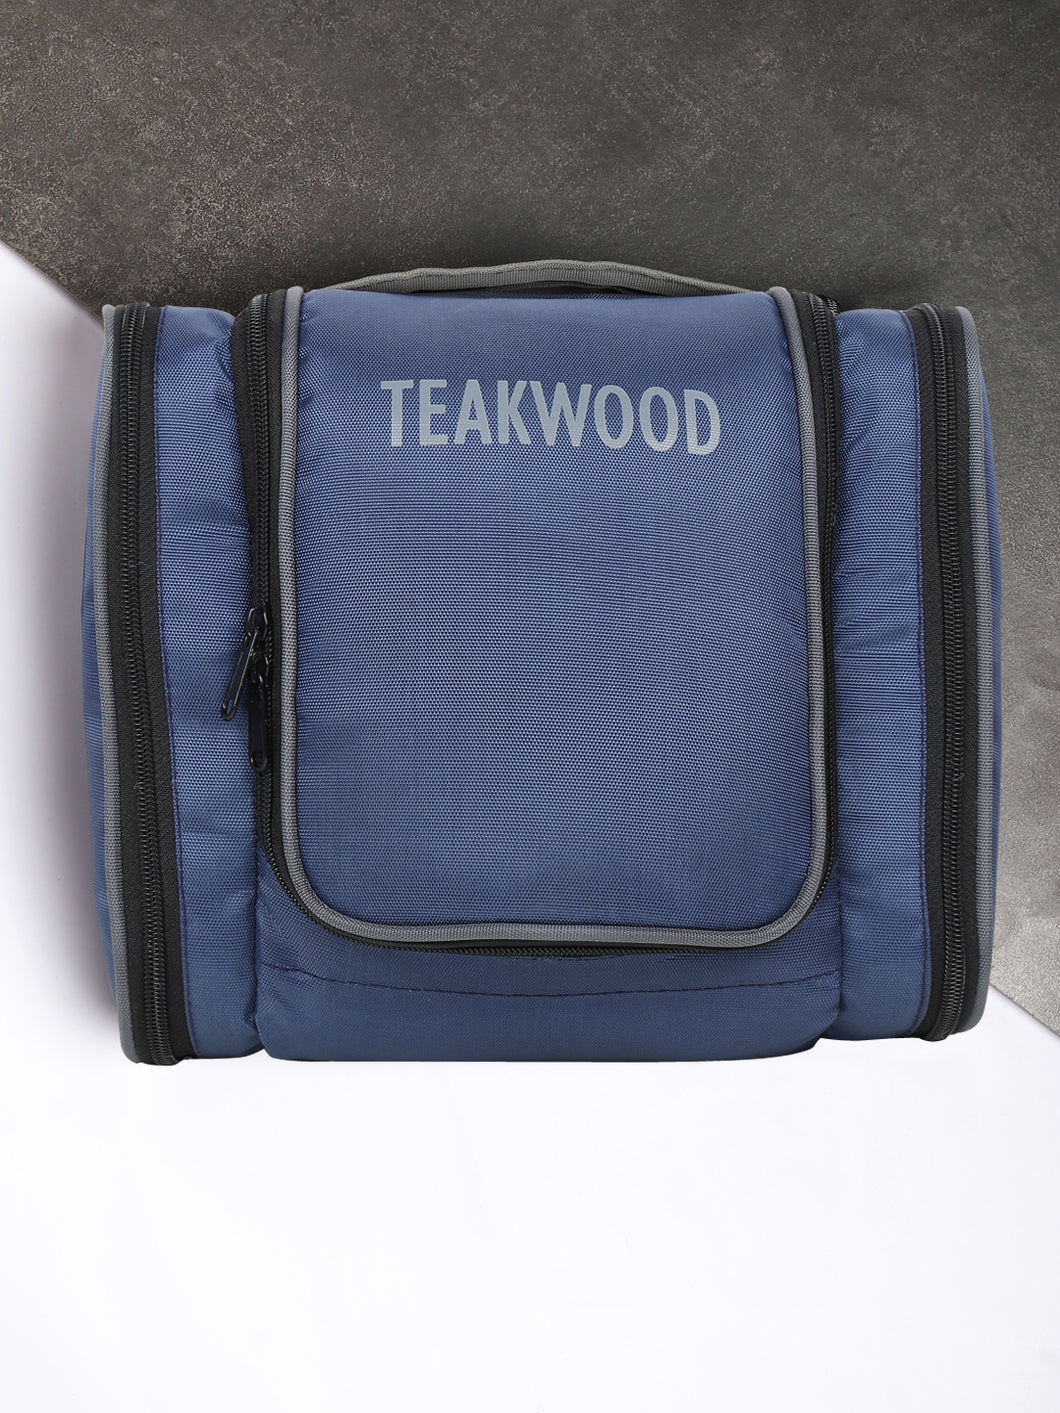 Teakwood Polyester Toiletry Kit Bag Blue